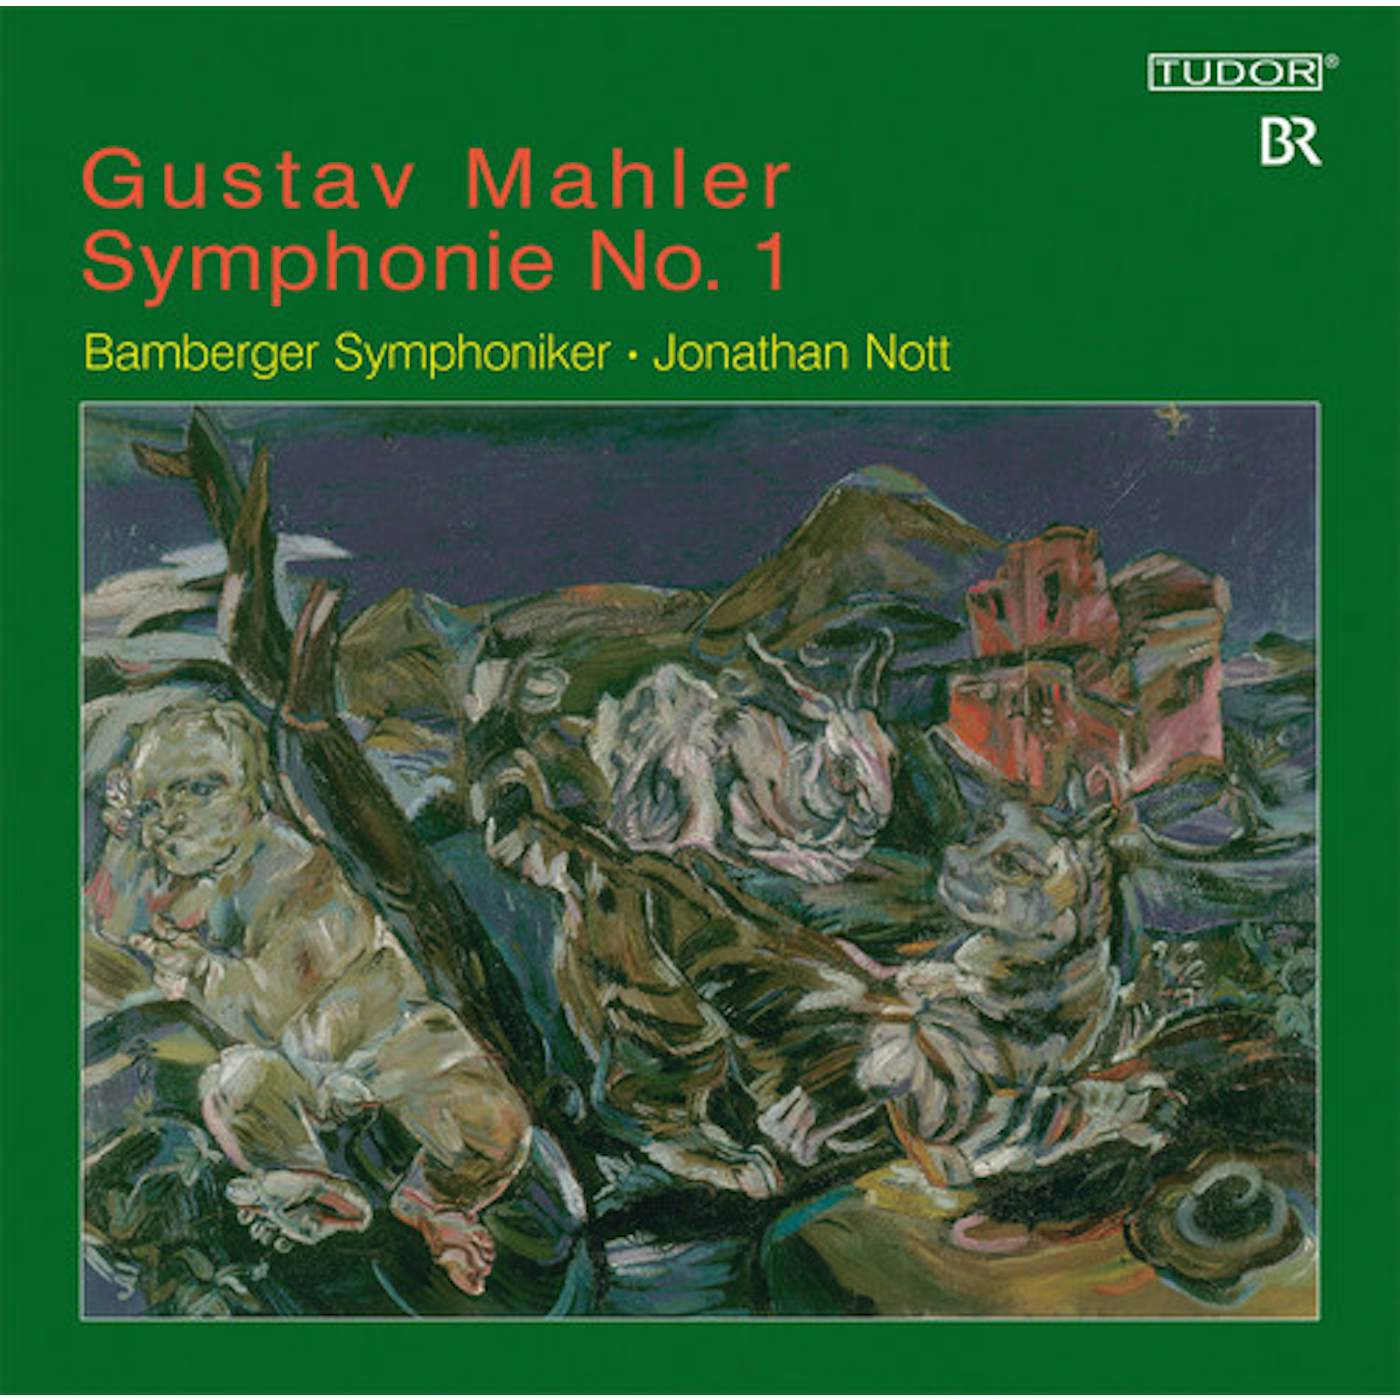 Gustav Mahler SYMPHONIE NO. 1 Super Audio CD